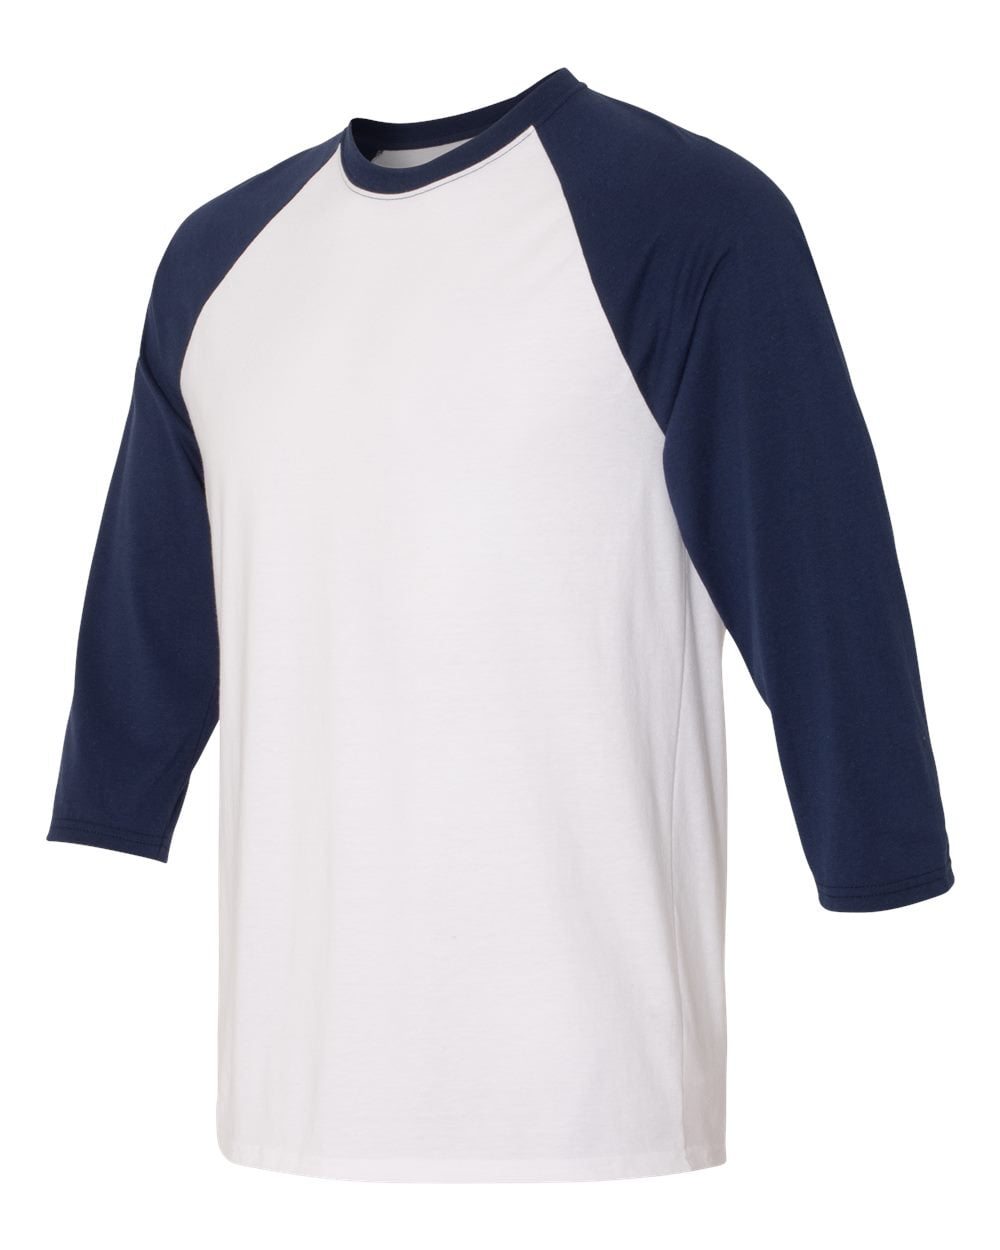 Hanes - X-Temp 3/4 Sleeve Baseball T Shirt - Walmart.com